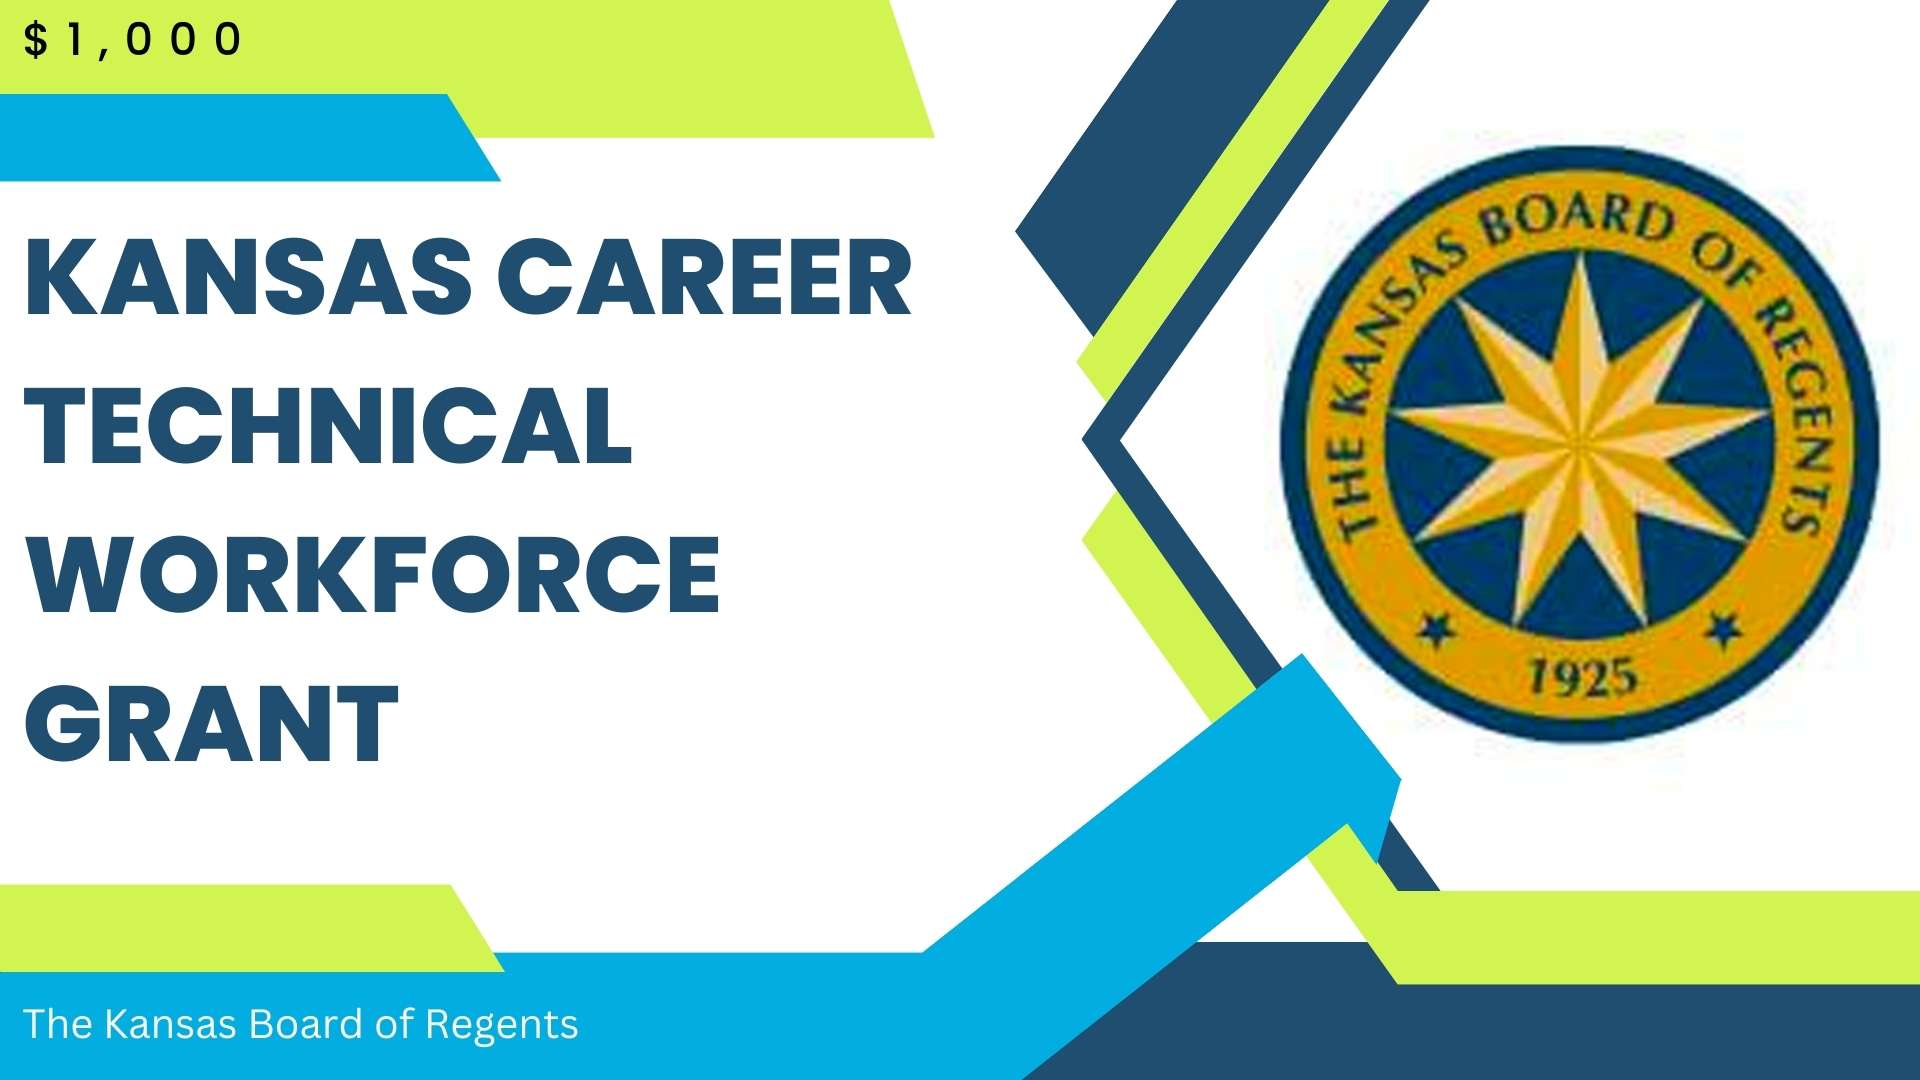 Kansas Career Technical Workforce Grant